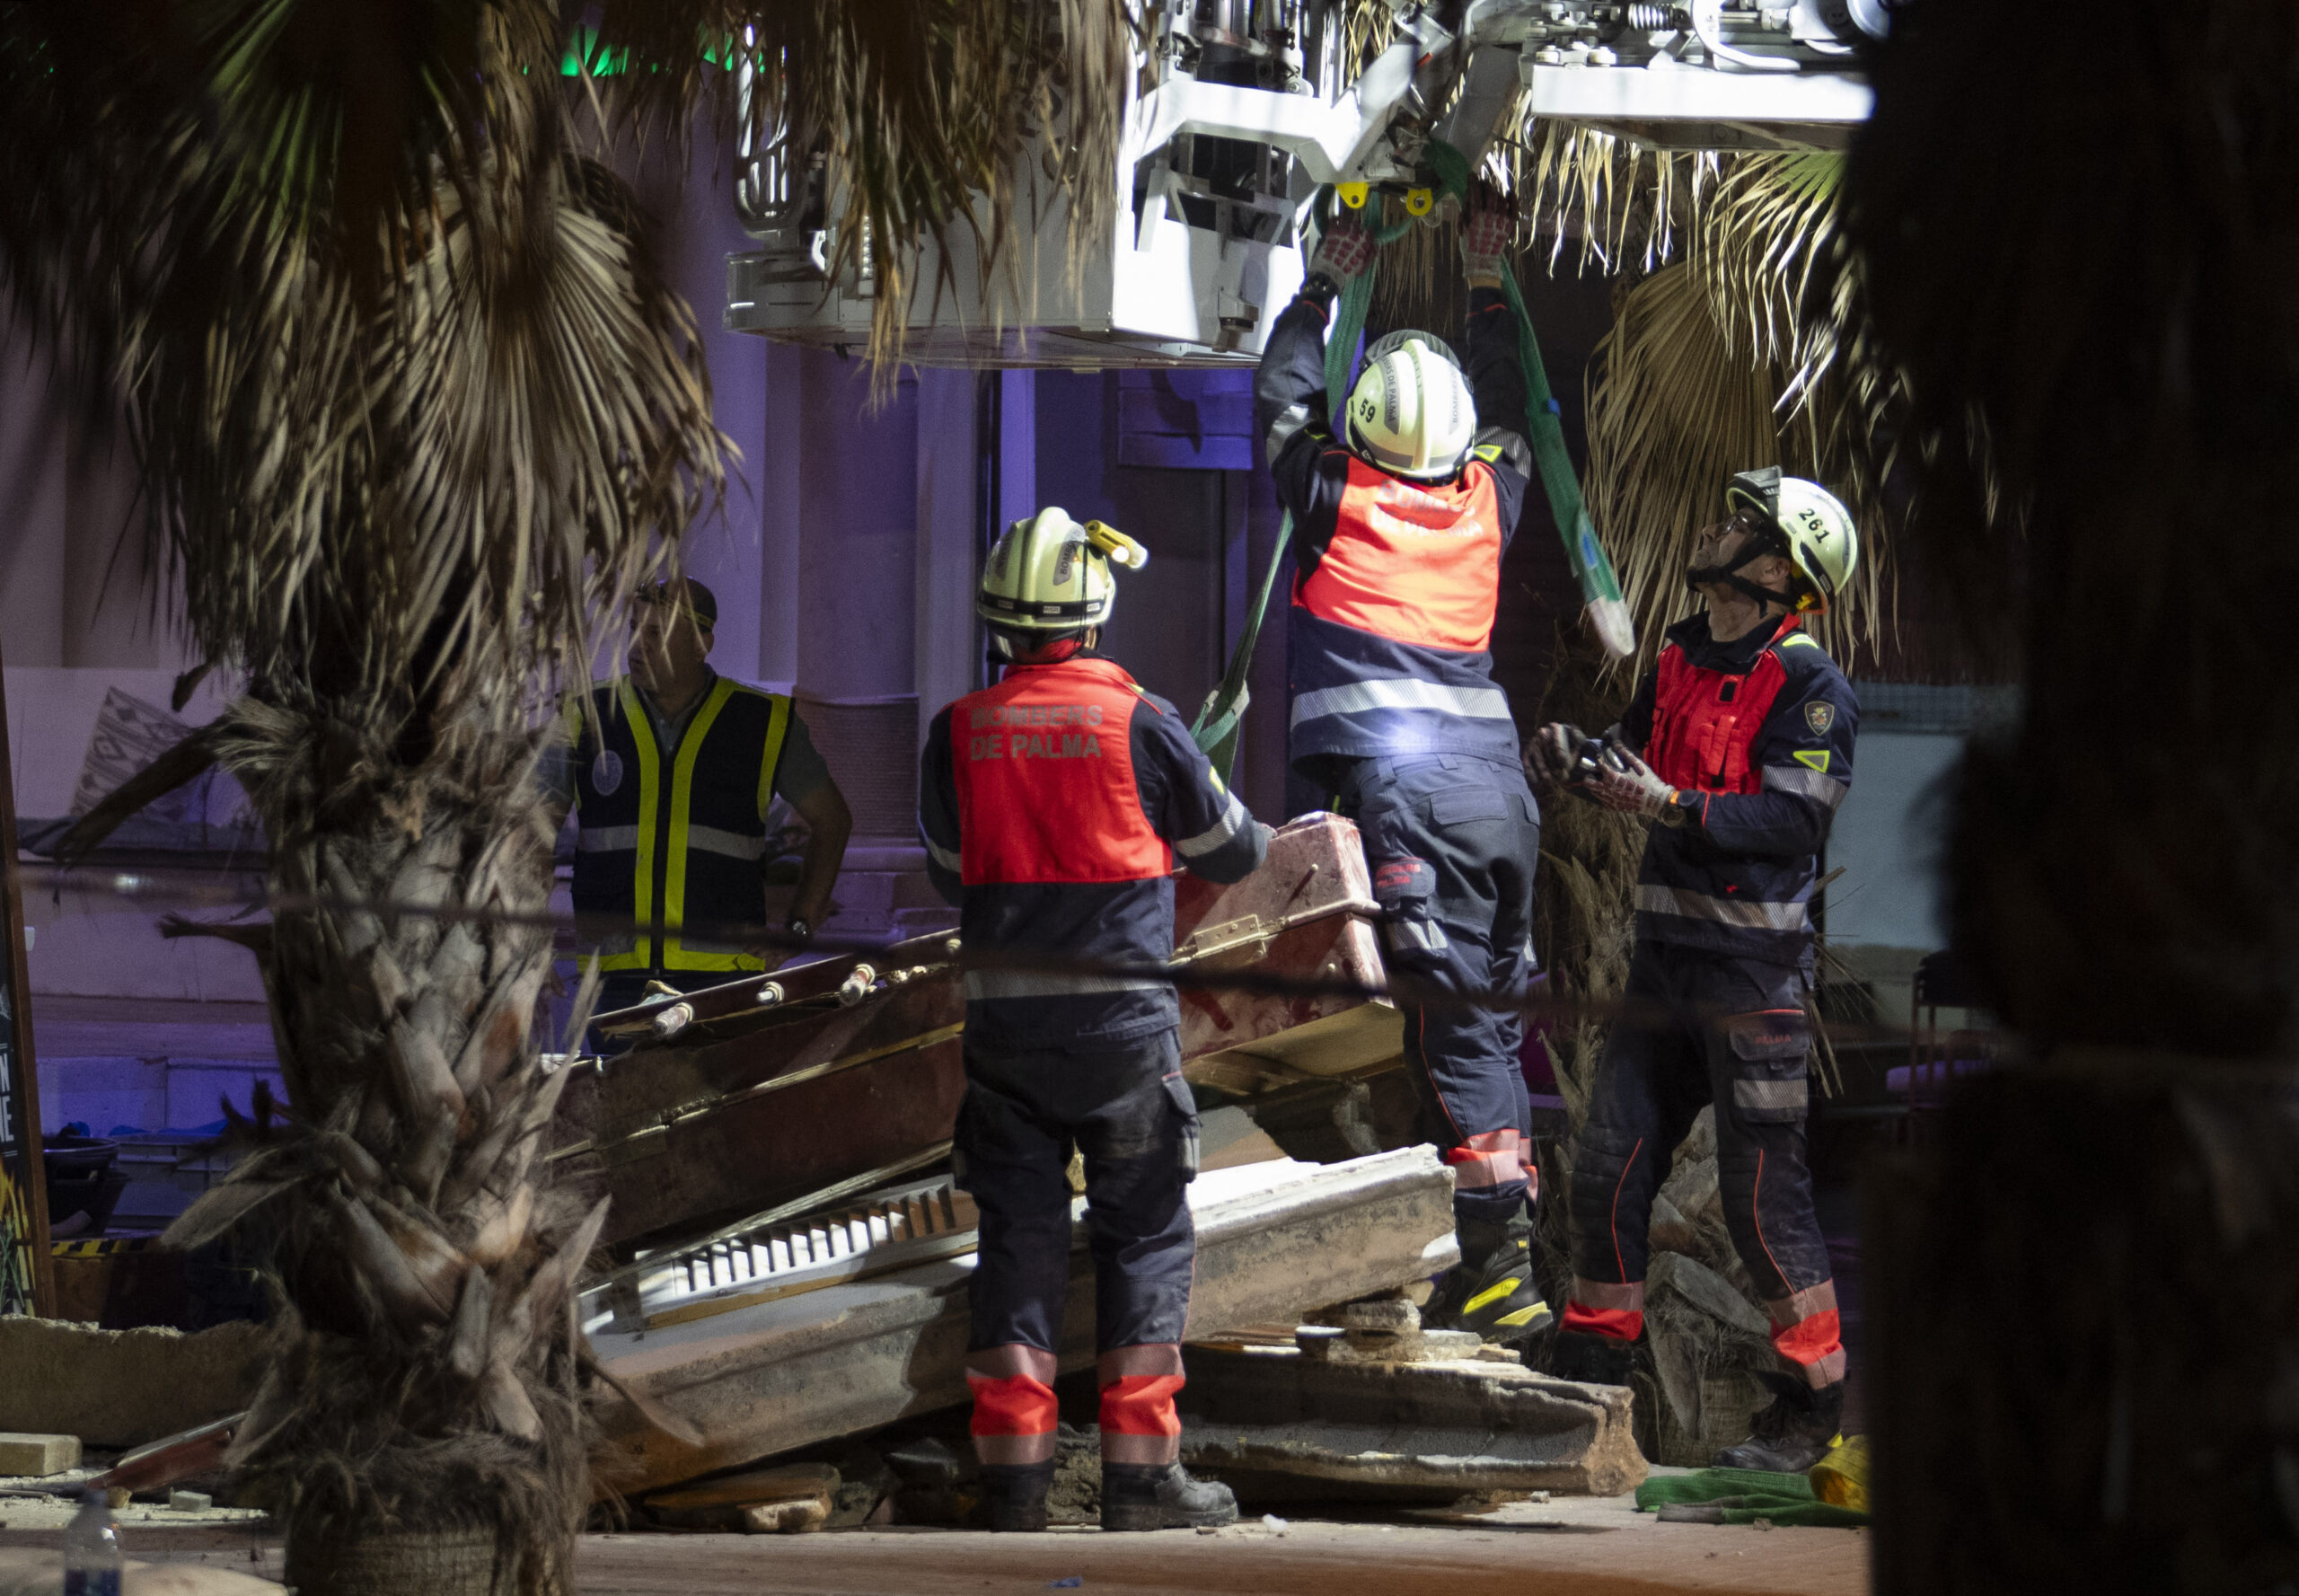 Spain restaurant roof collapse kills 4, injures 21